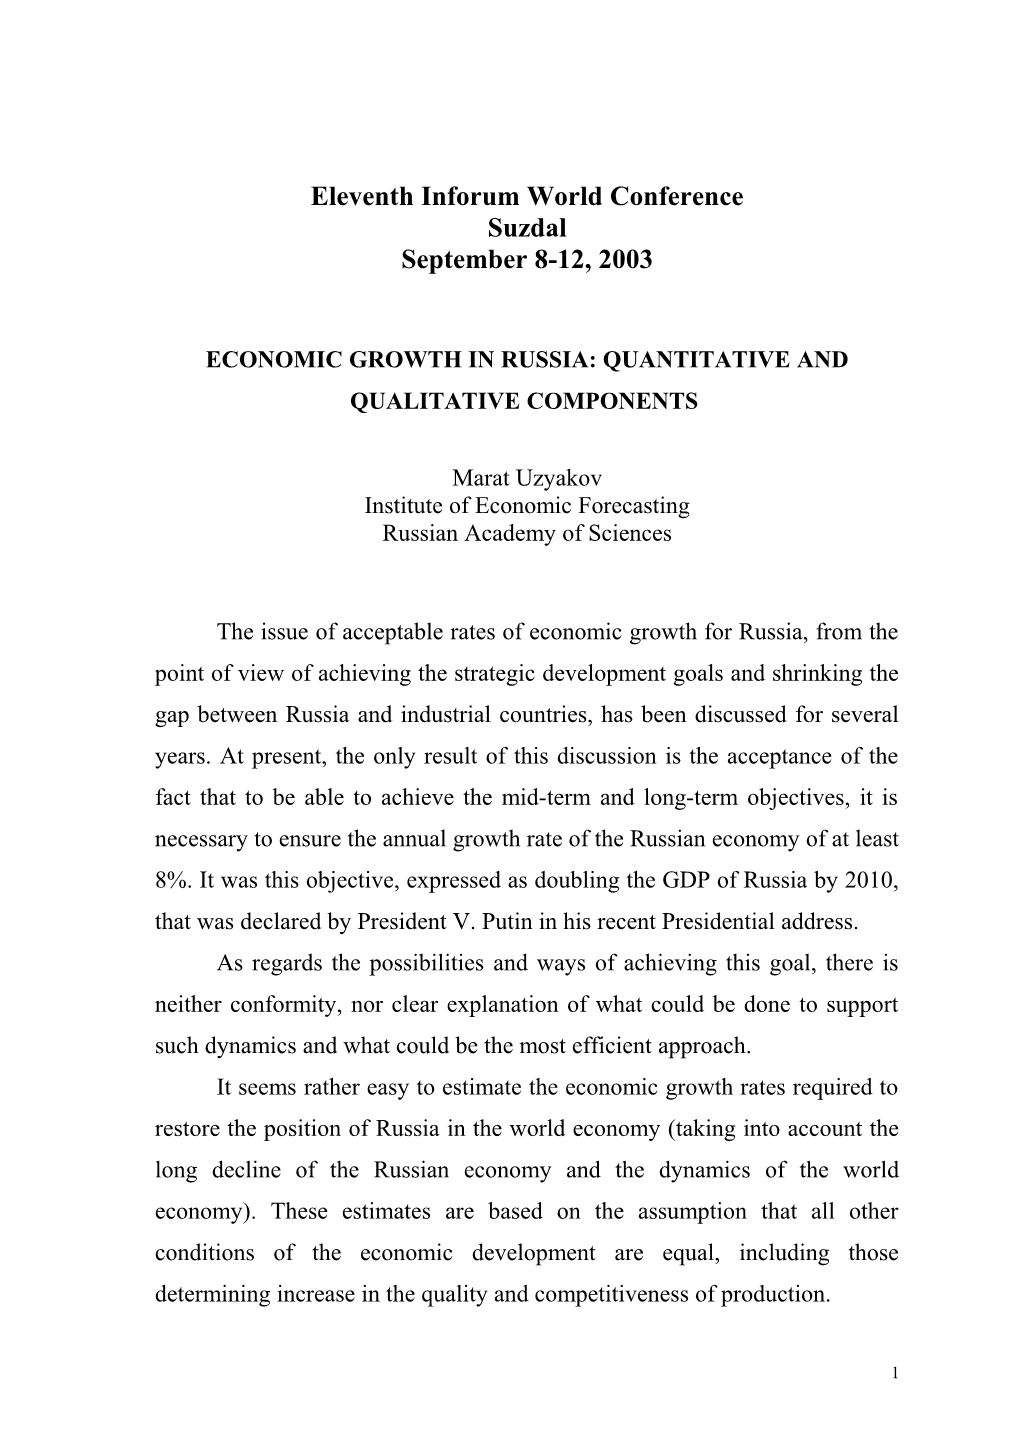 Economic Growth in Russia: Quantitative and Qualitative Components